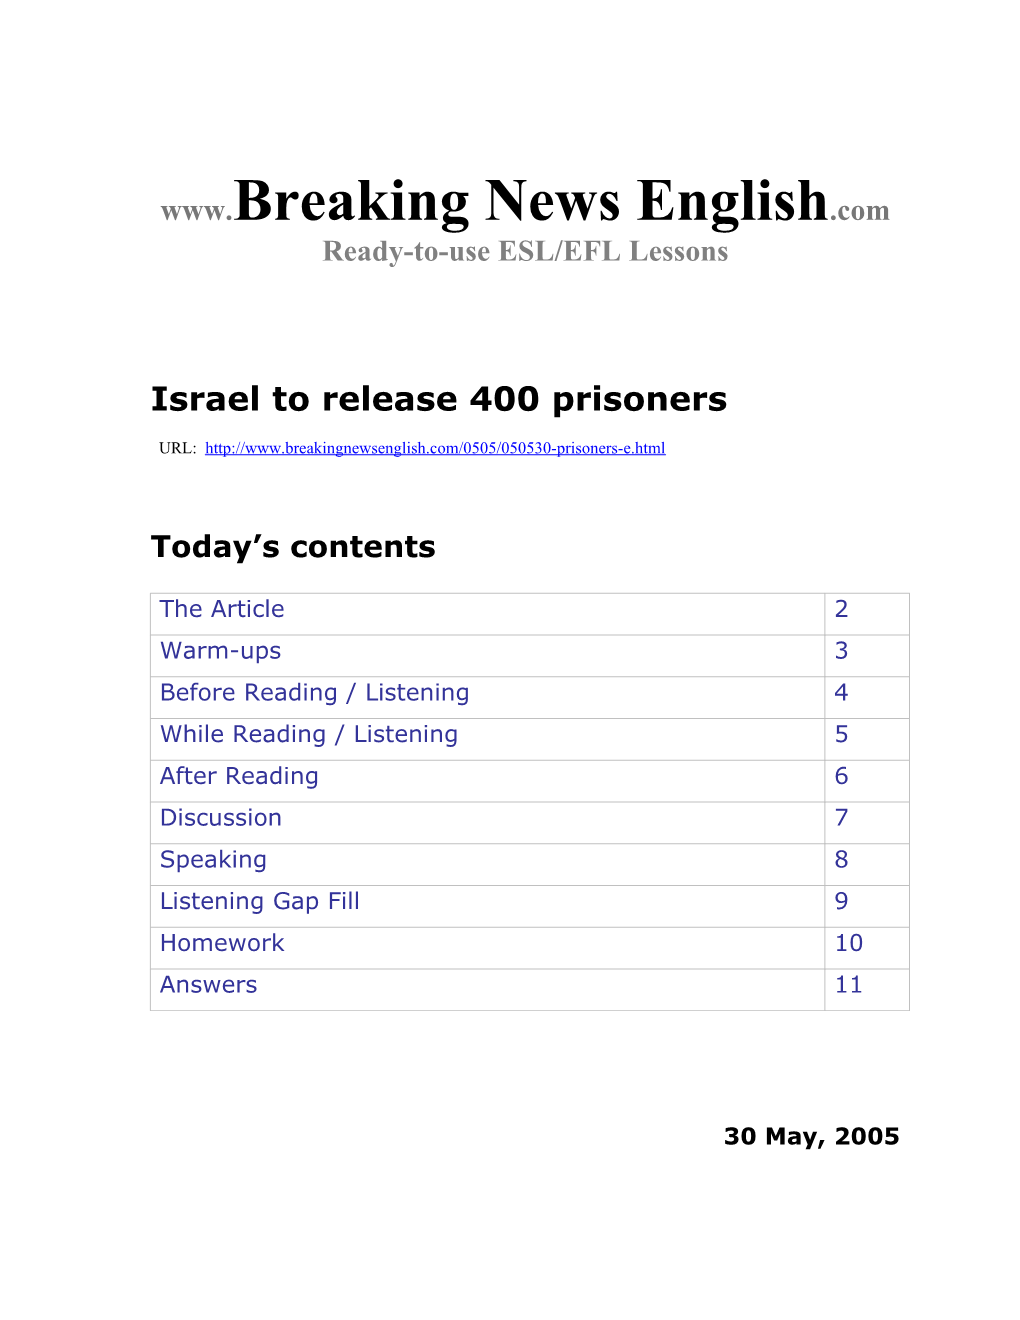 Israel to Release 400 Prisoners